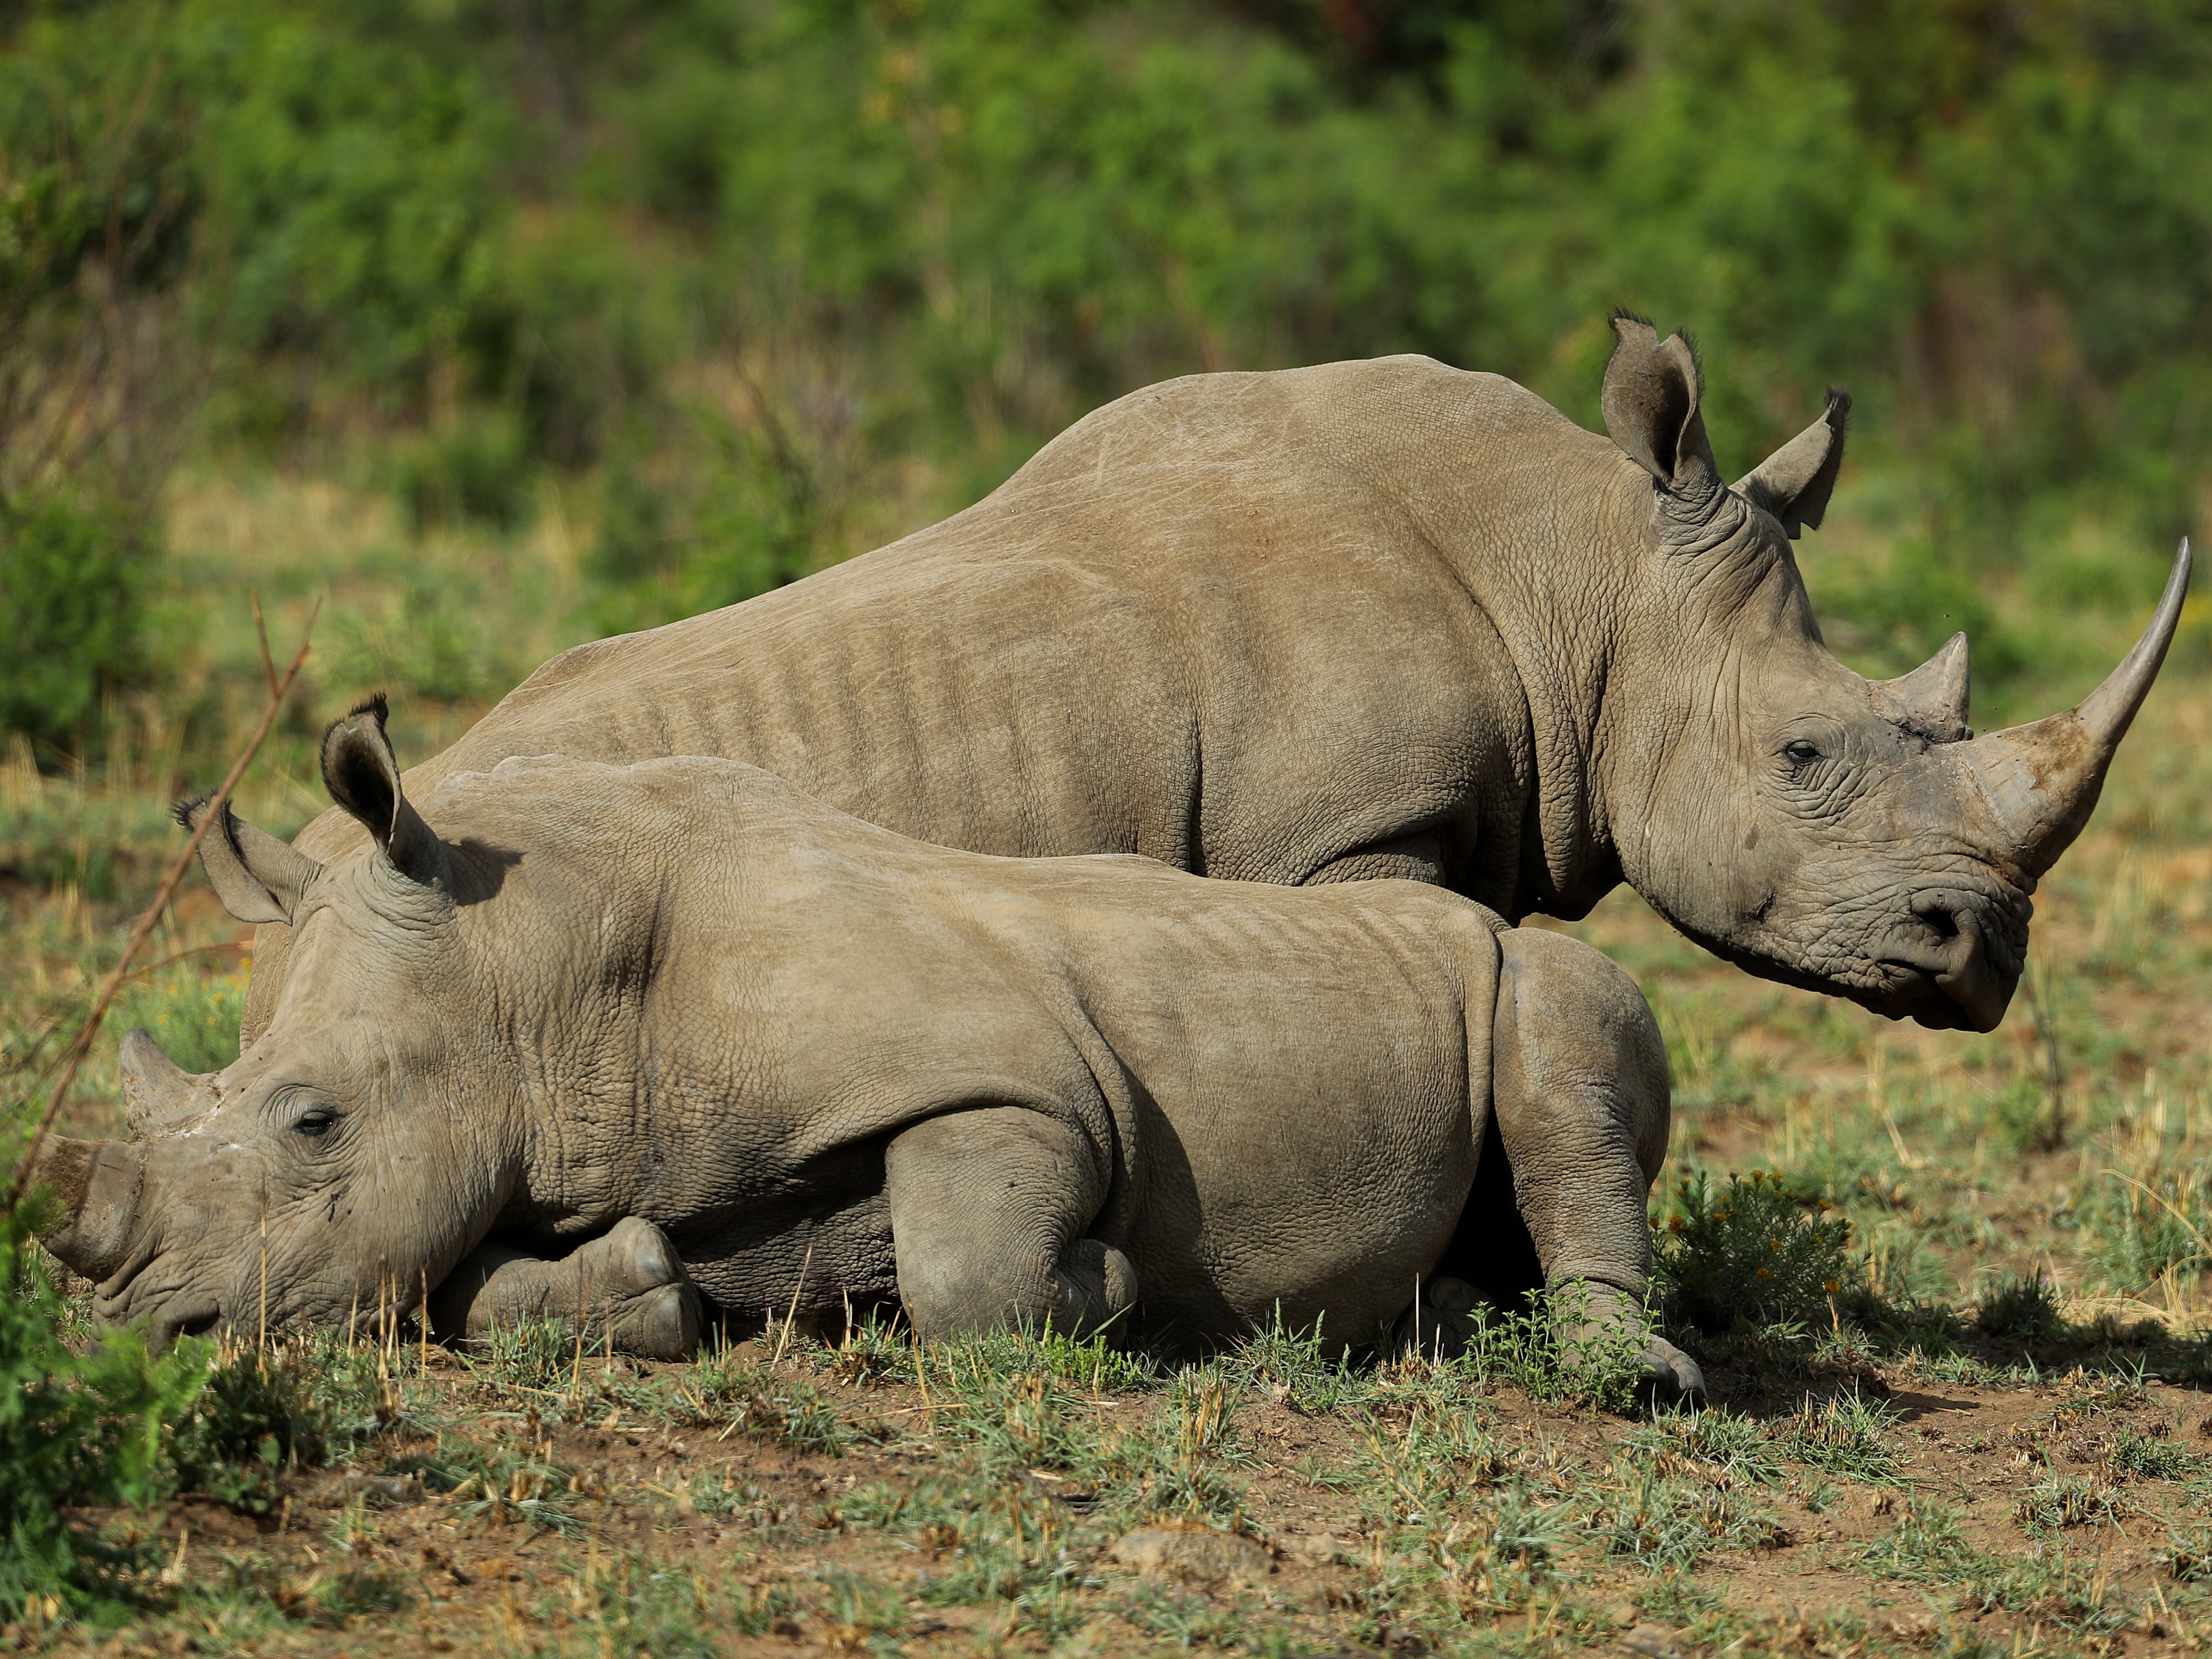 White rhino at Pilanesberg National Park in South Africa